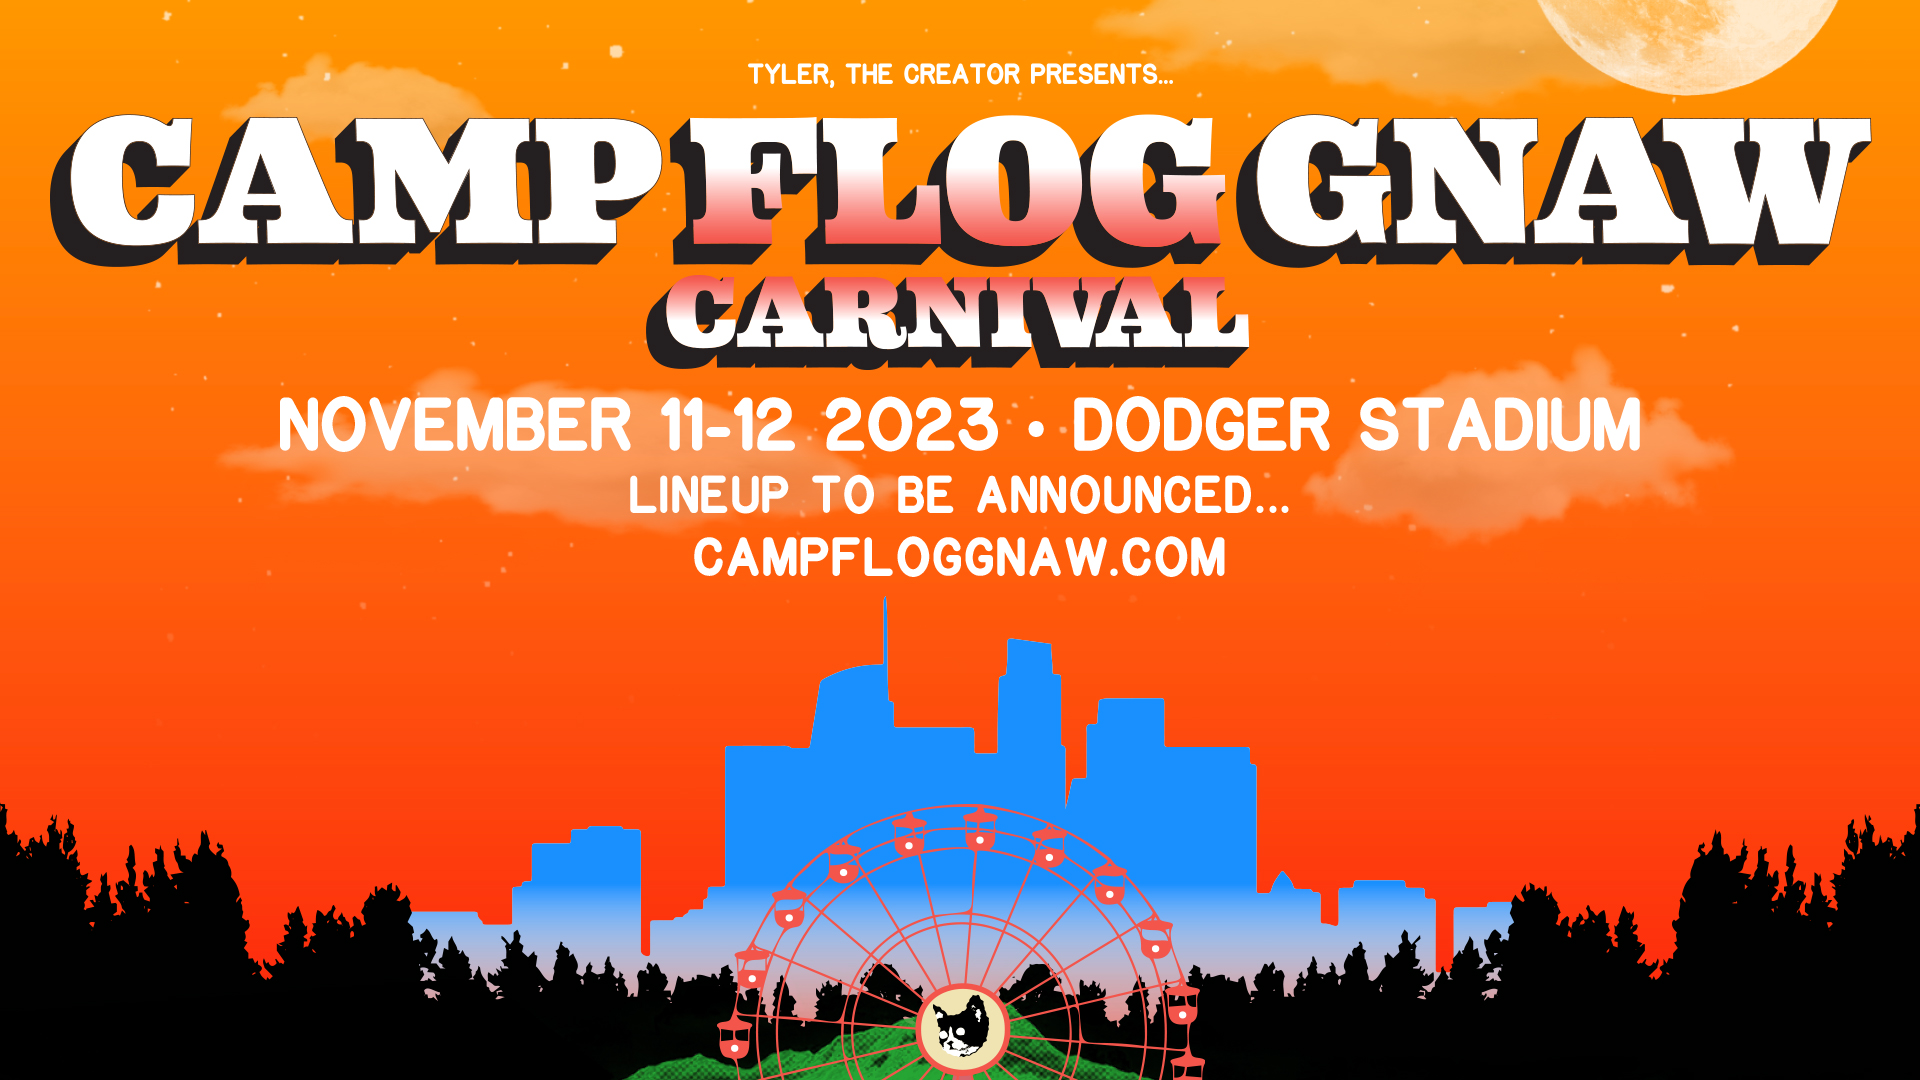 Tyler, the Creator Announces Camp Flog Gnaw Carnival 2023 at Dodger Stadium GDE